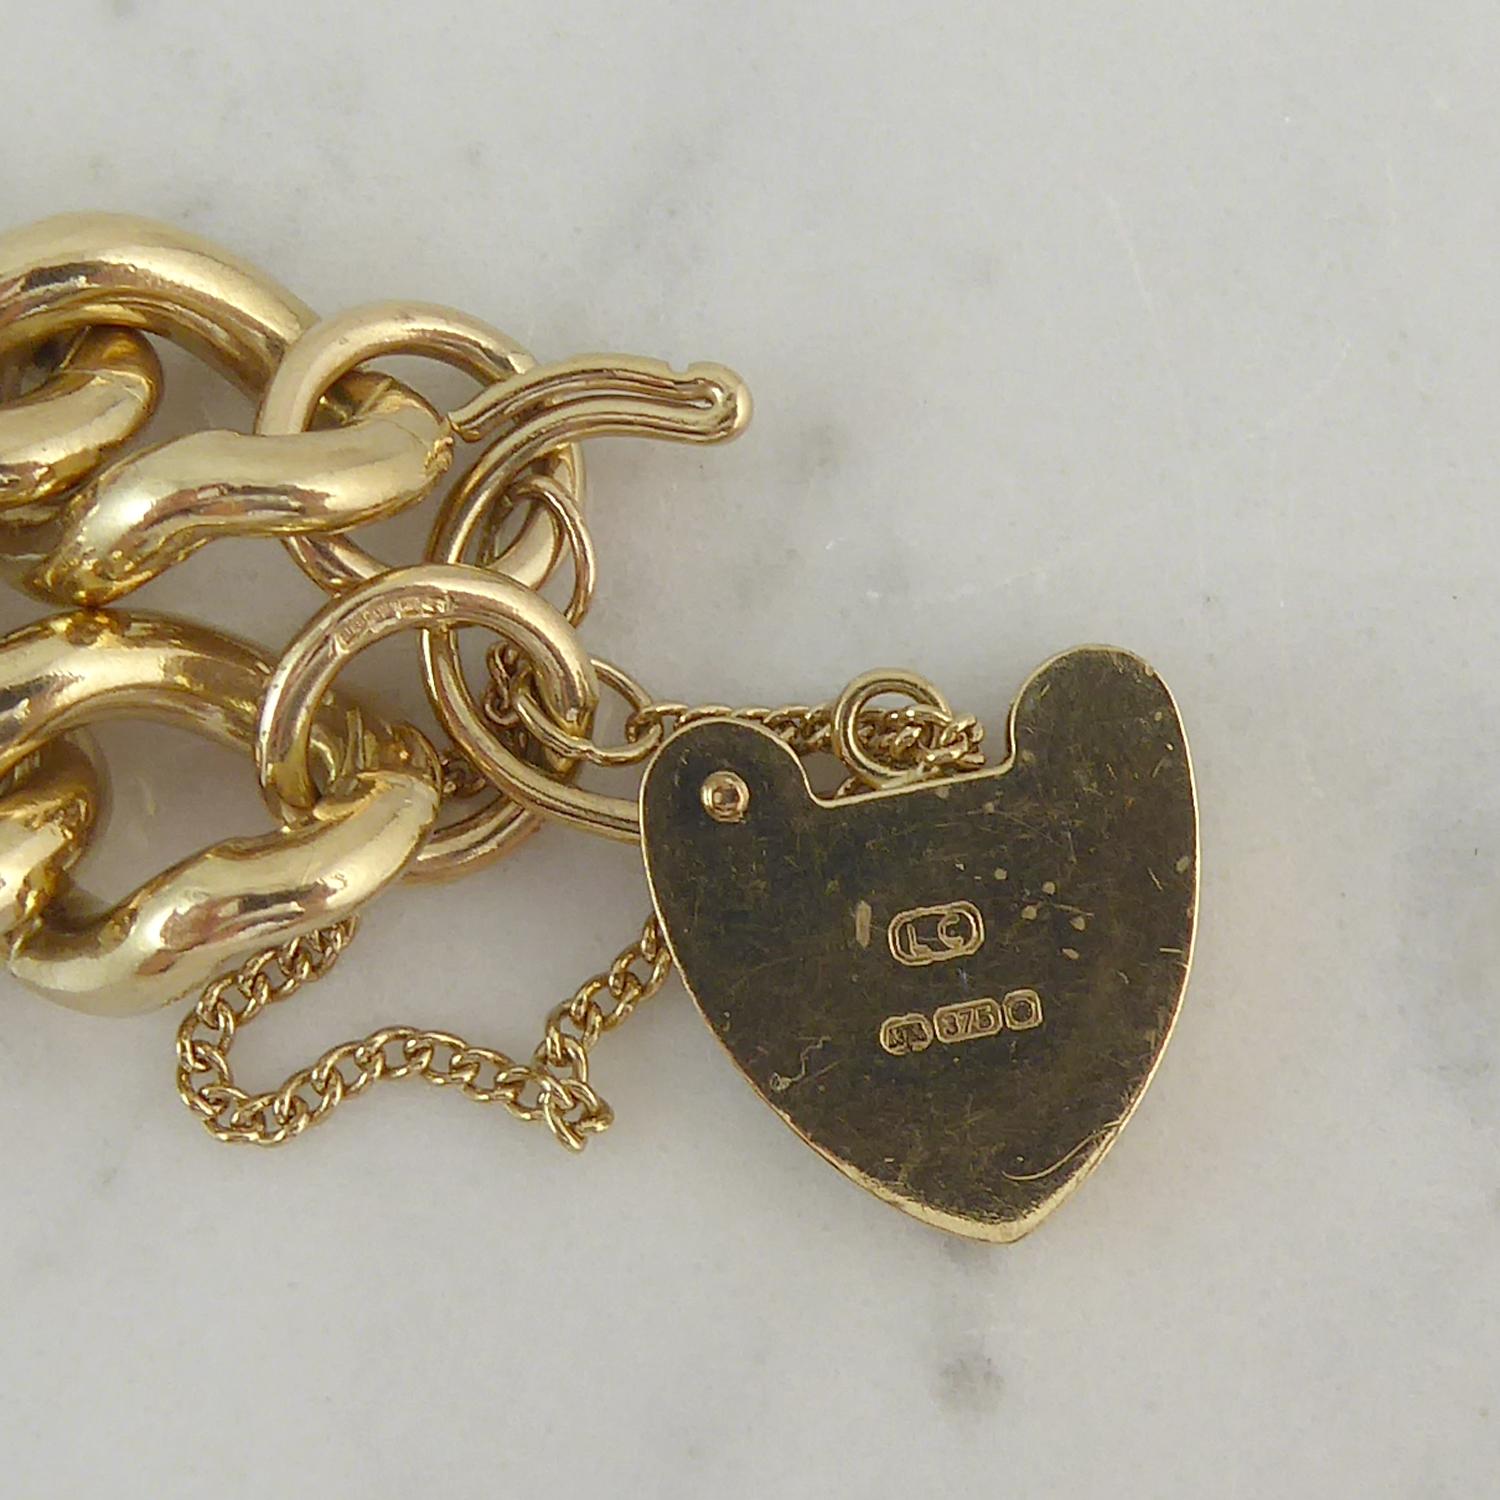 Woman's or Men's Vintage Gold Curb Link Bracelet, Padlock Closure, Yellow Gold 4